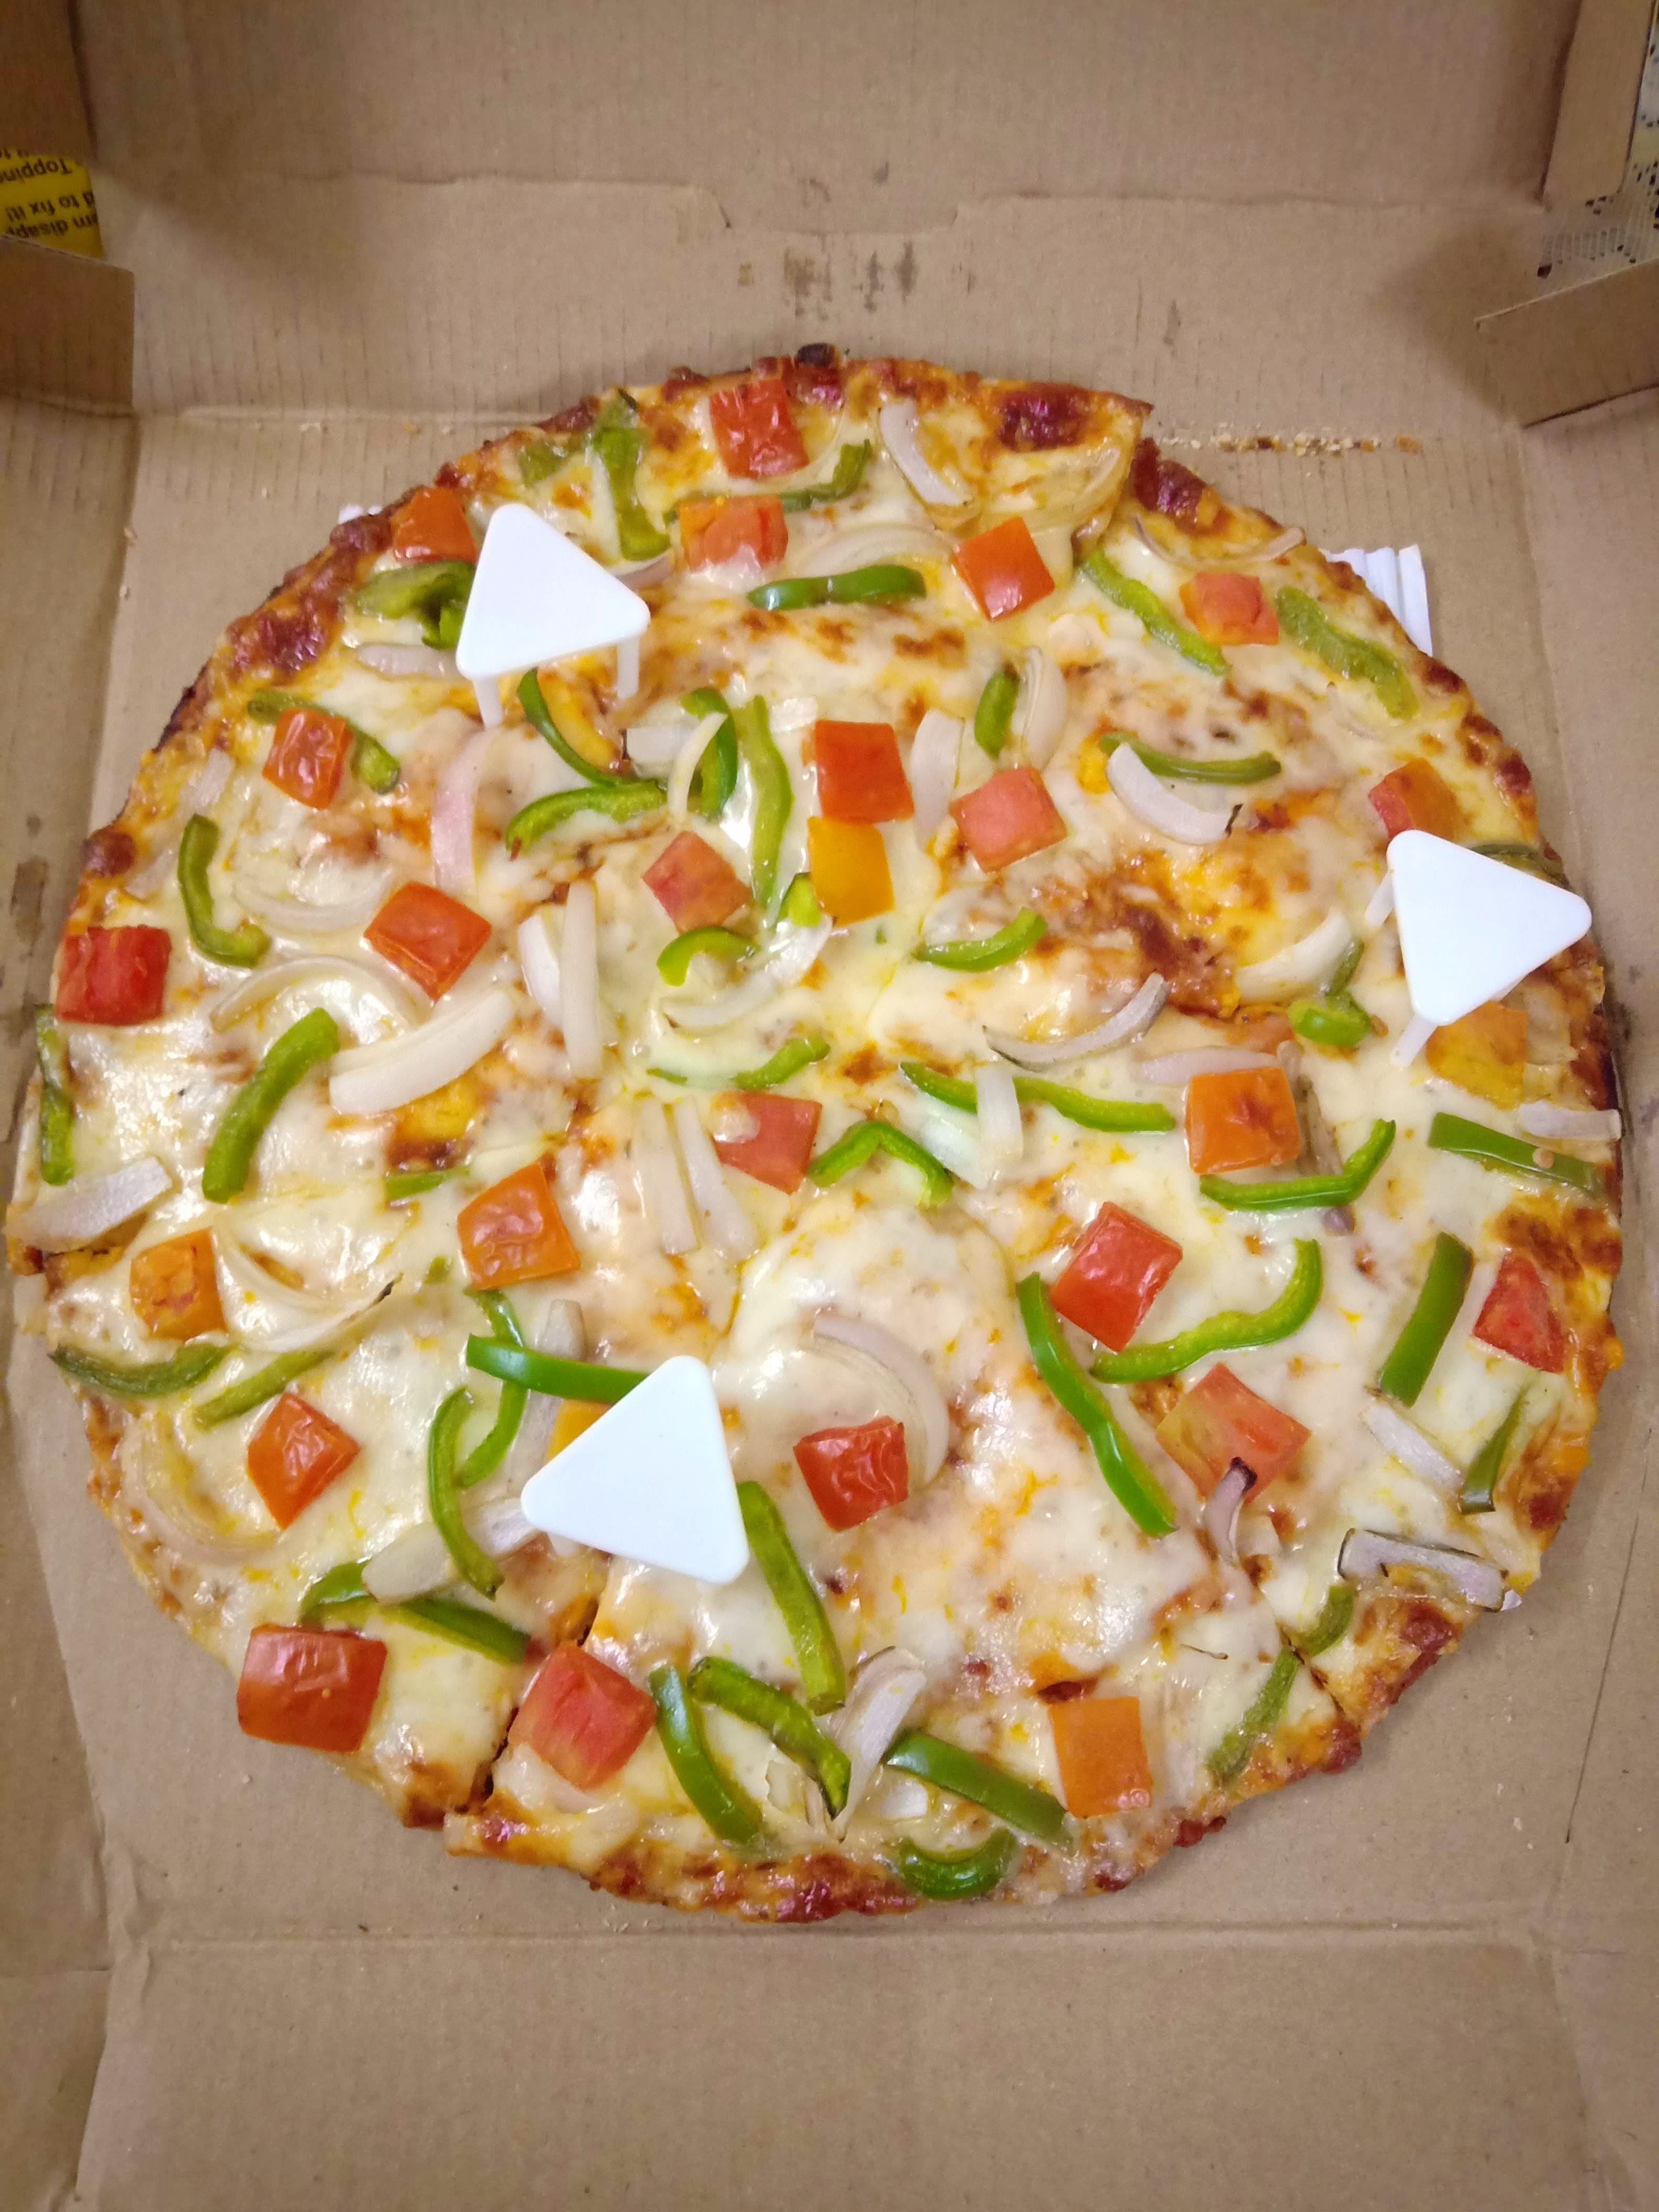 Dish,Food,Cuisine,Pizza,California-style pizza,Ingredient,Pizza cheese,Flatbread,Junk food,Italian food